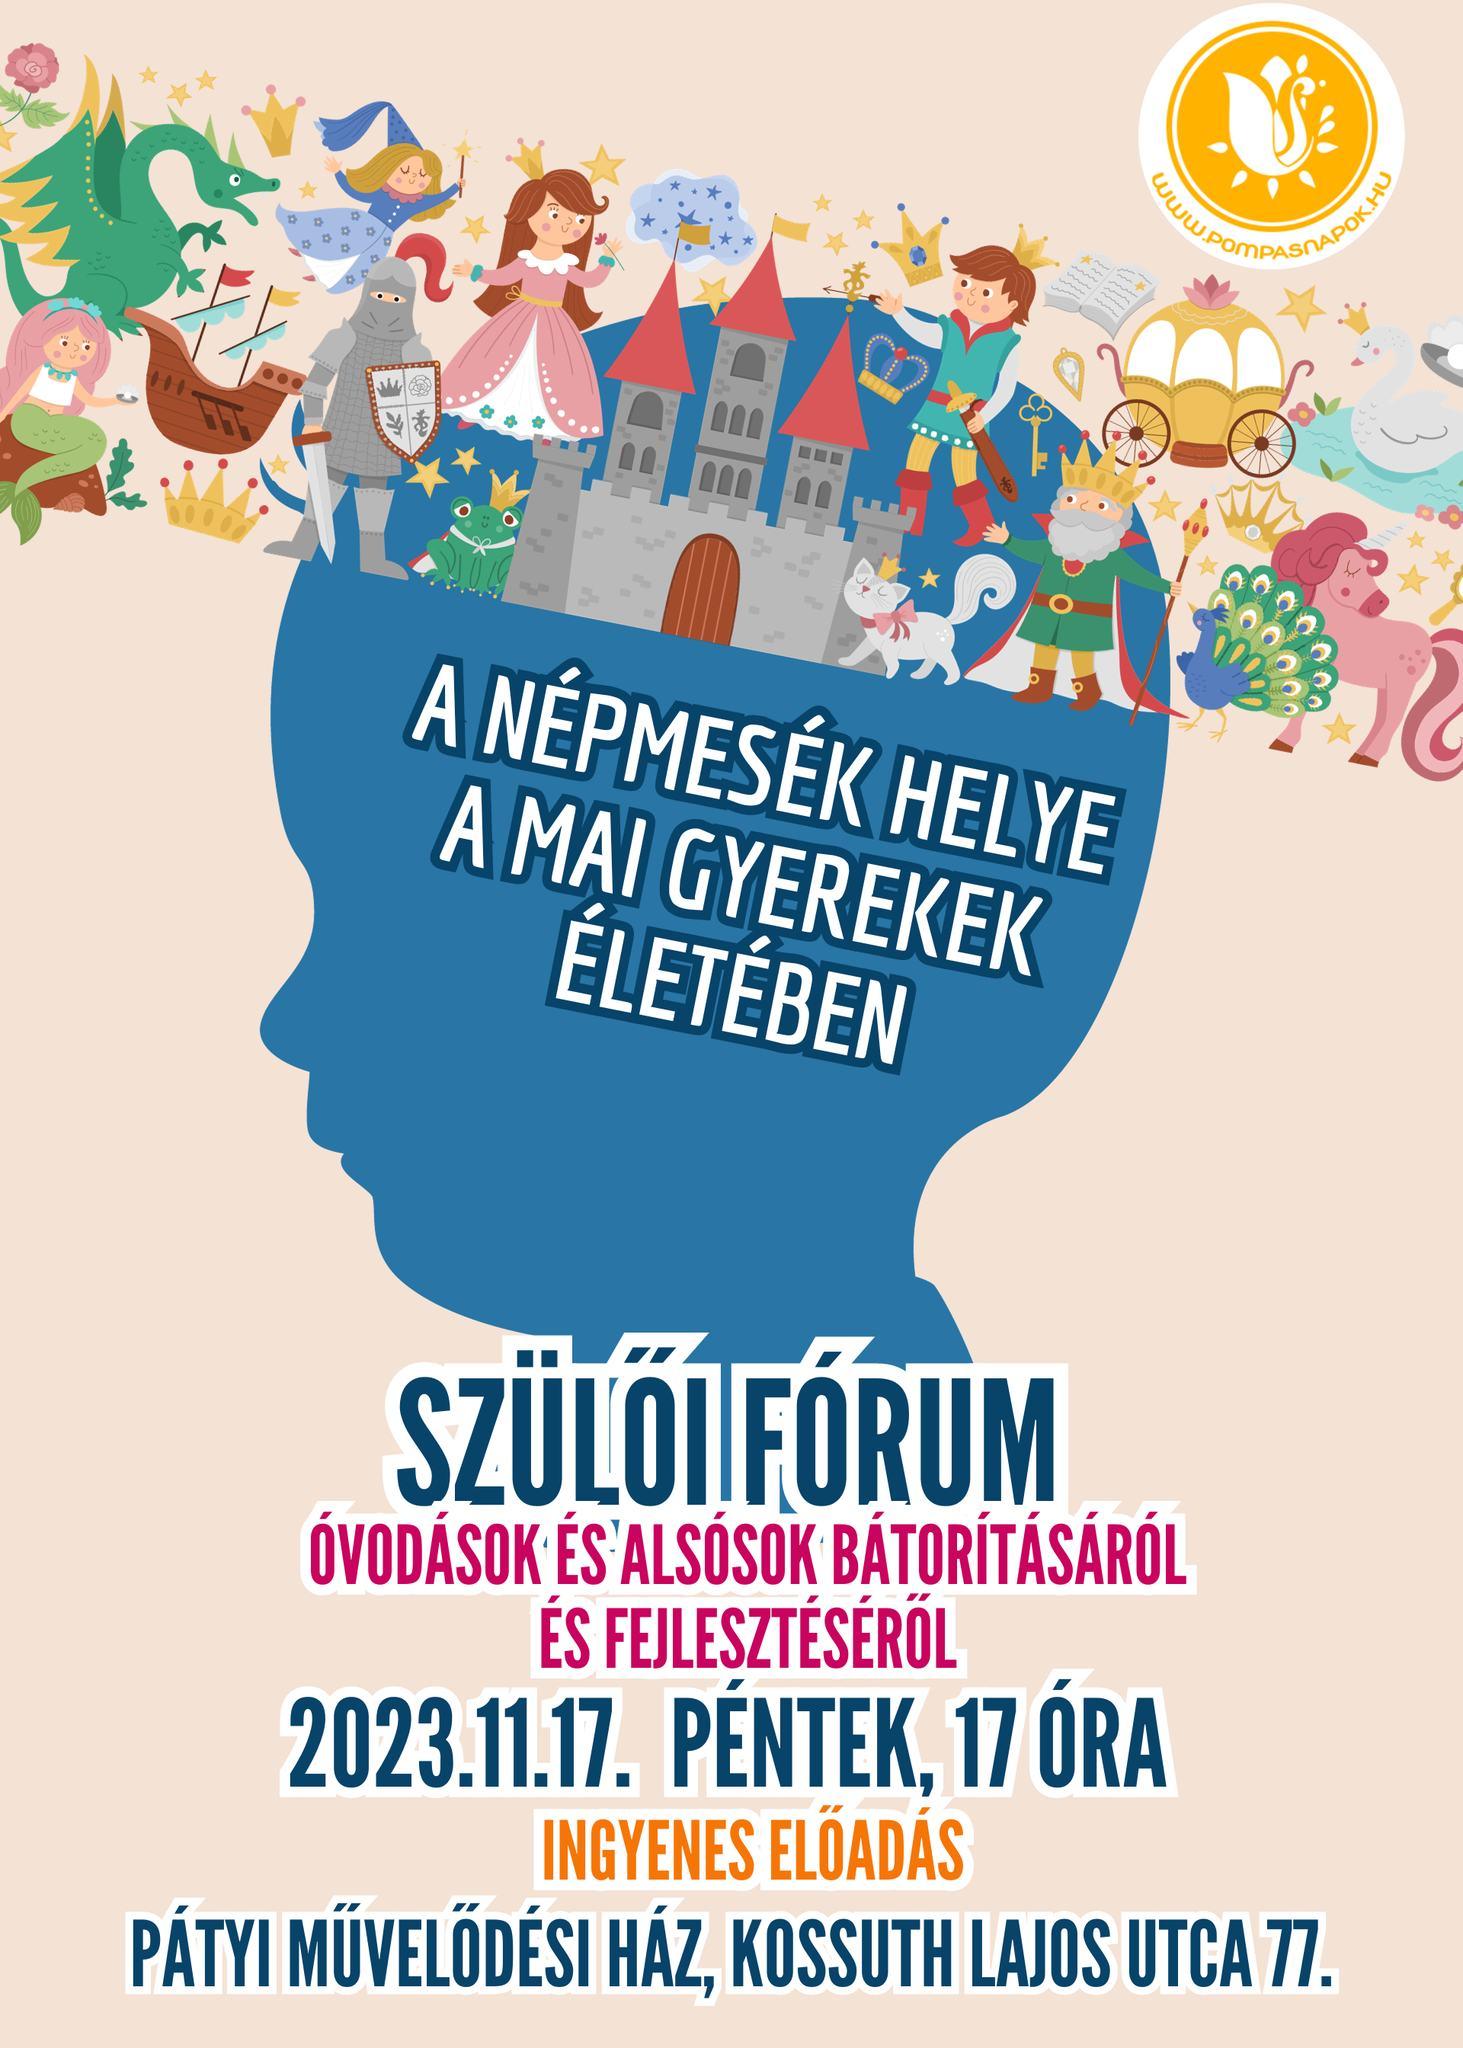 Szuloi forum